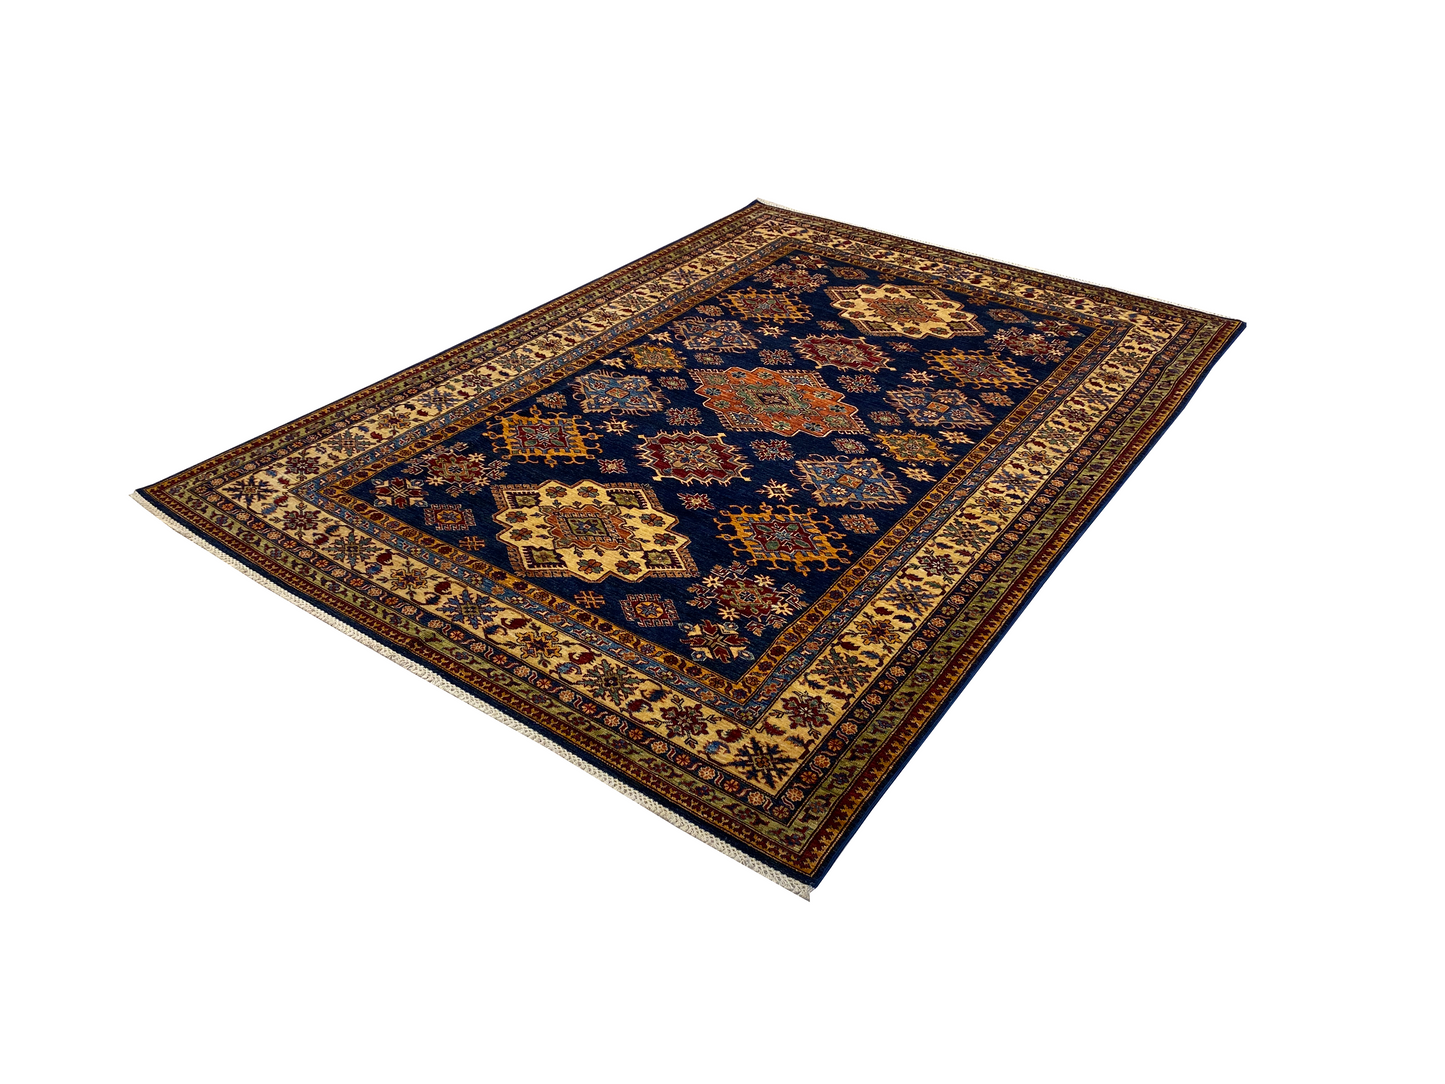 Şirvan Bicolor Carpet 210 X 297 cm